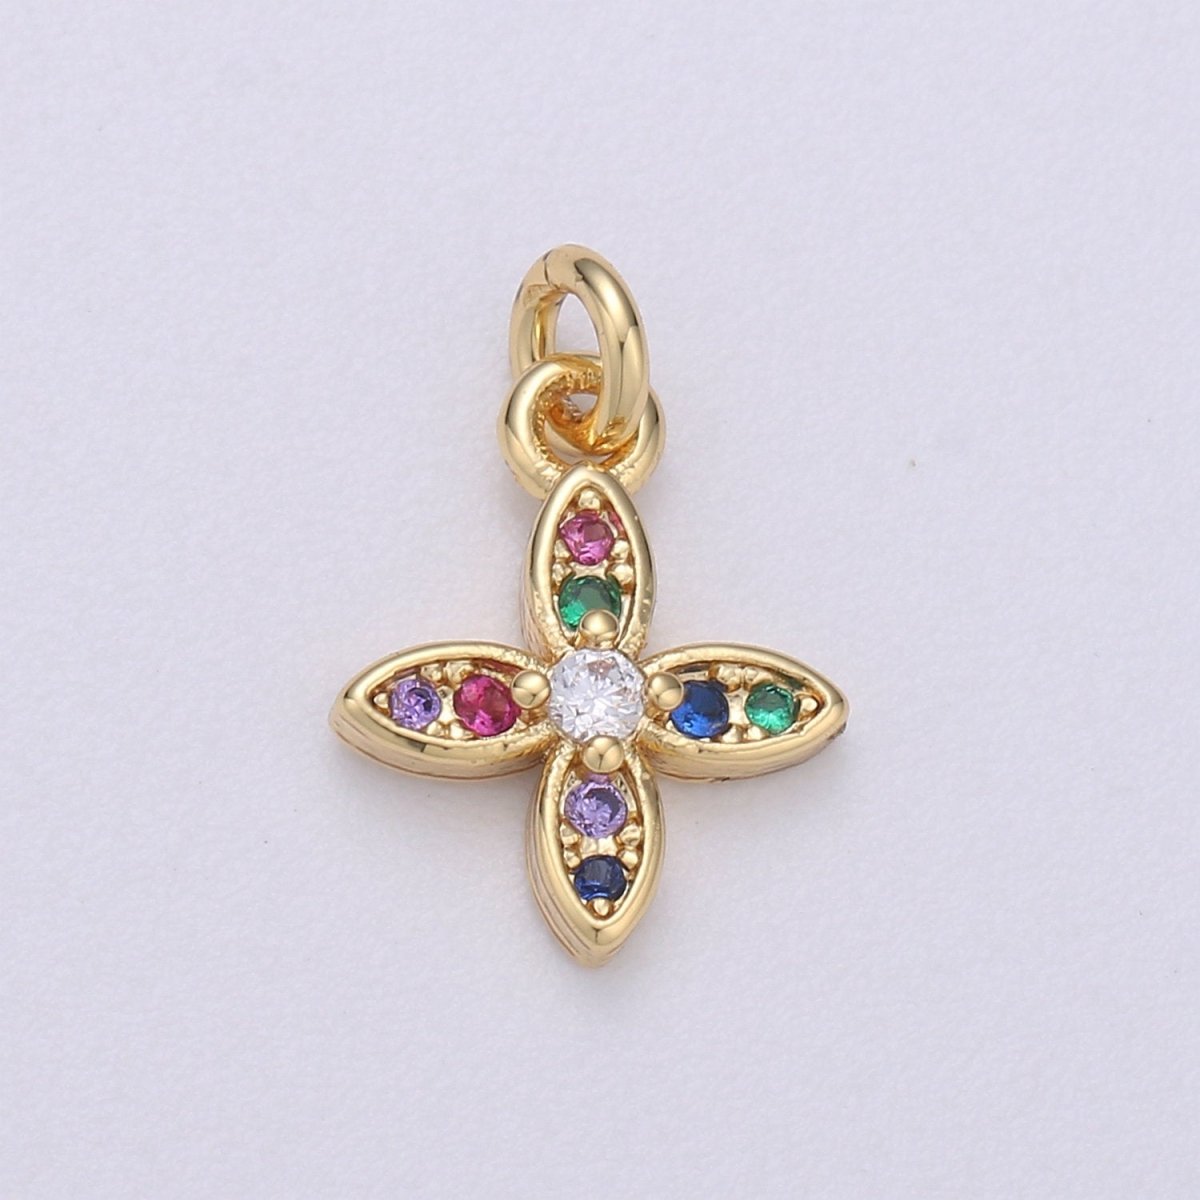 14k Gold Filled Flower Charm Micro Pave Petal Charm, Rainbow Cubic Charms, CZ Gold Colorful Charm, Dainty Minimalist Jewelry SupplyC-559 - DLUXCA